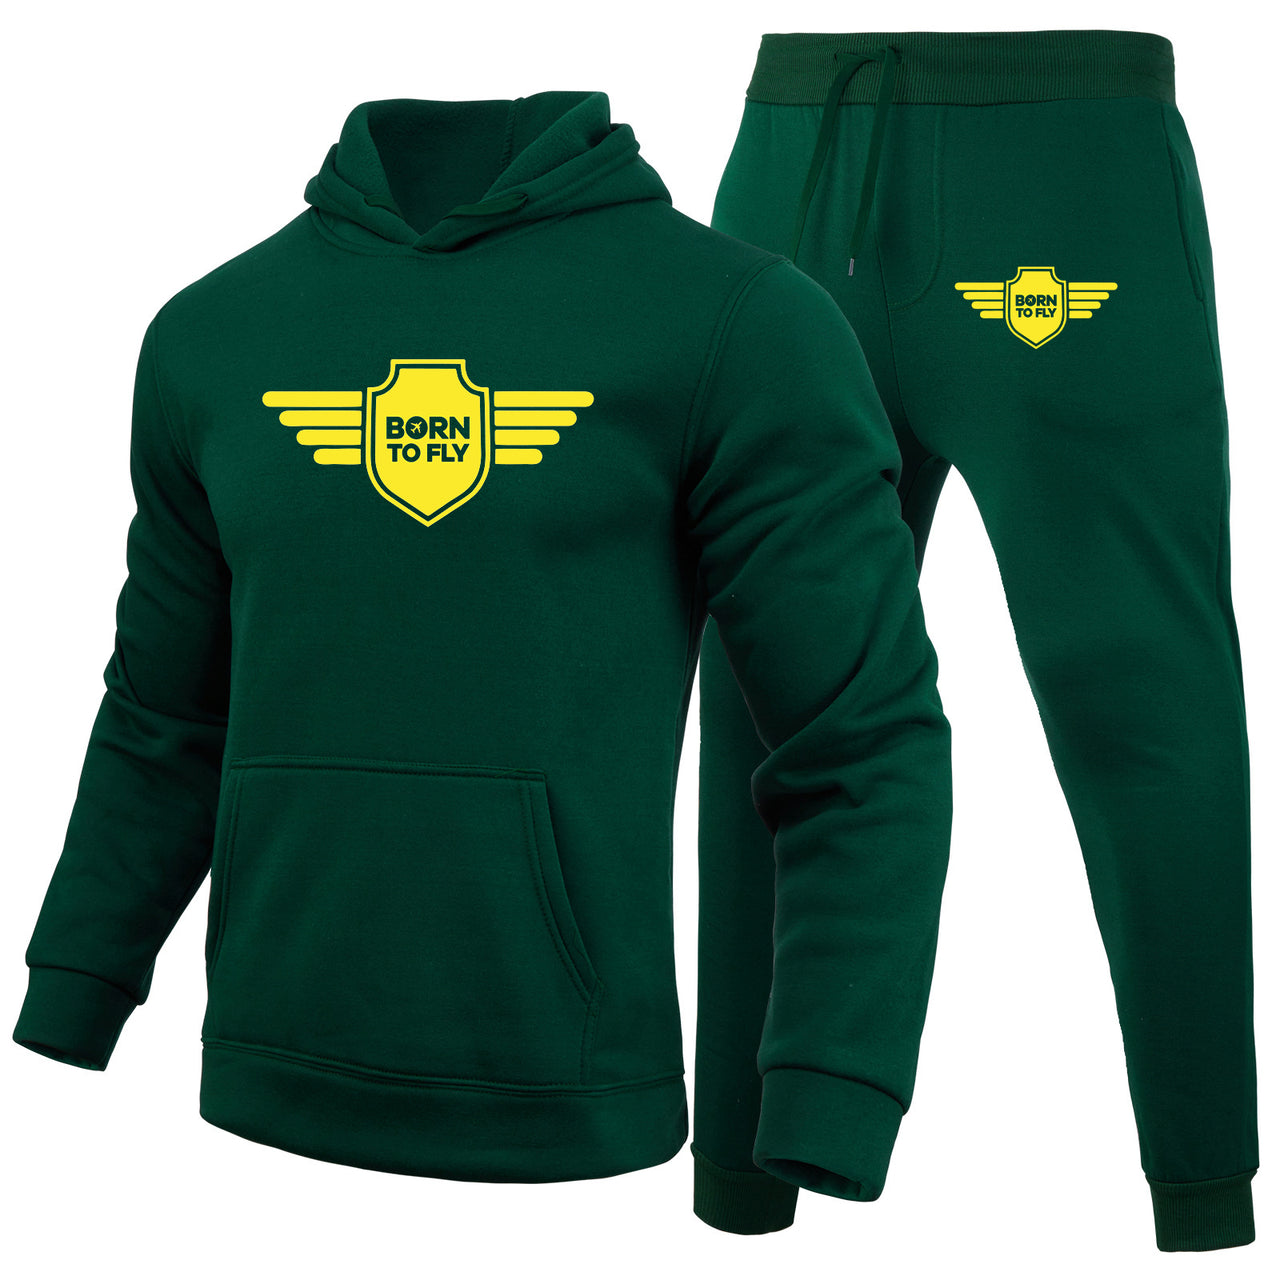 Born To Fly & Badge Designed Hoodies & Sweatpants Set